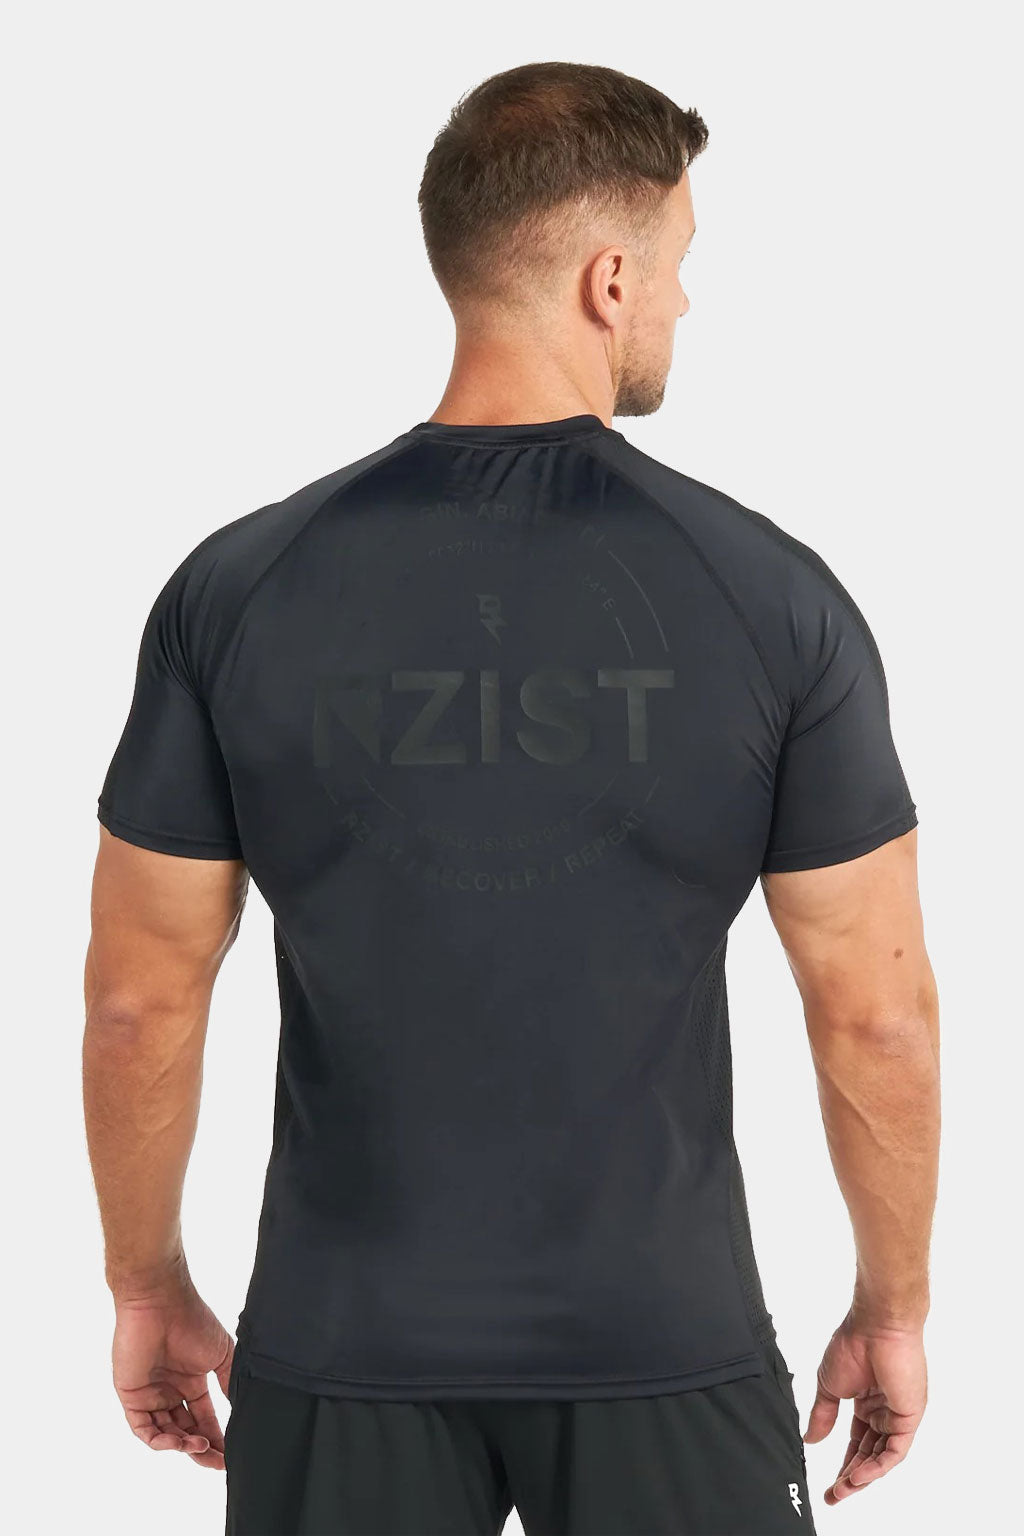 Rzist - Performance Jet Black Graphic T-shirt